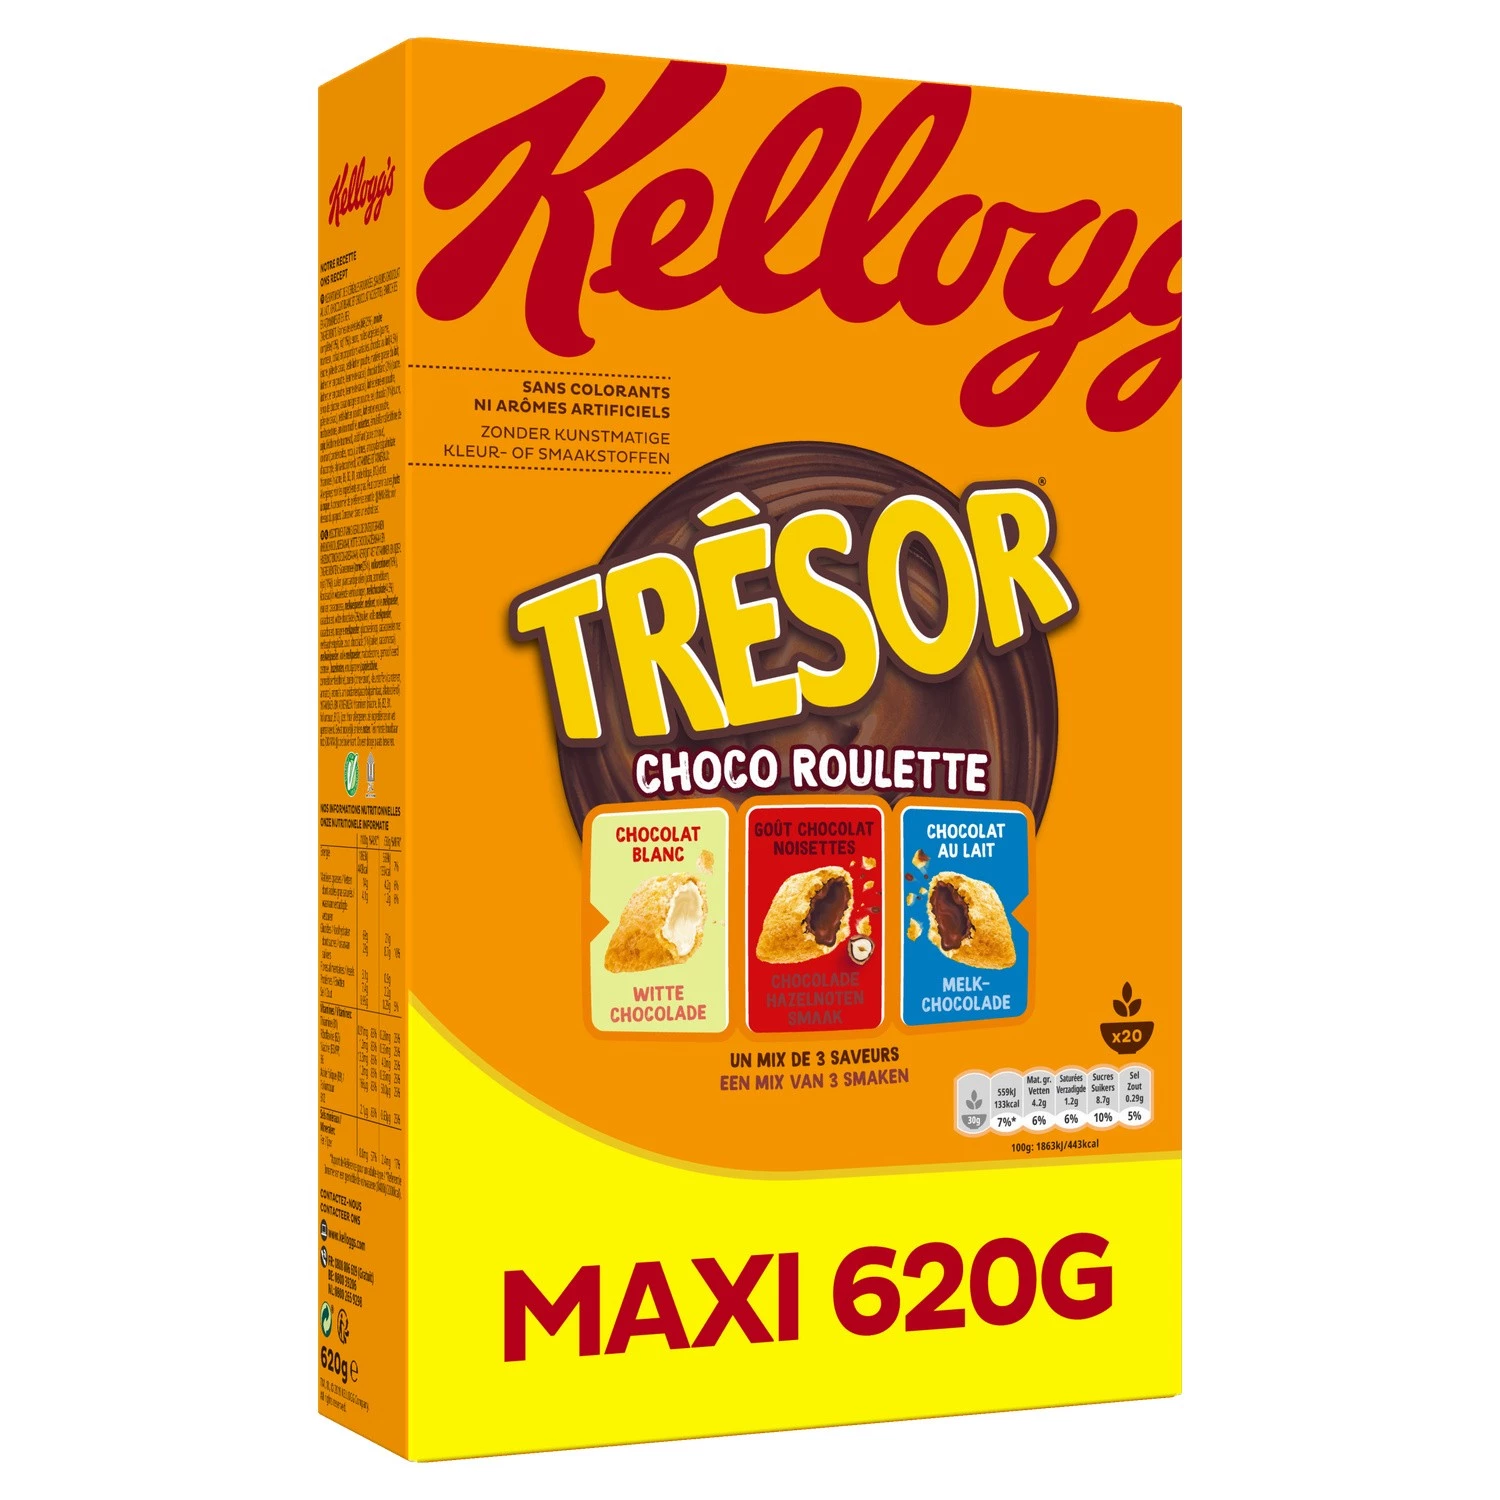 Tresor Choco Roulette 麦片, 620g - KELLOGG'S